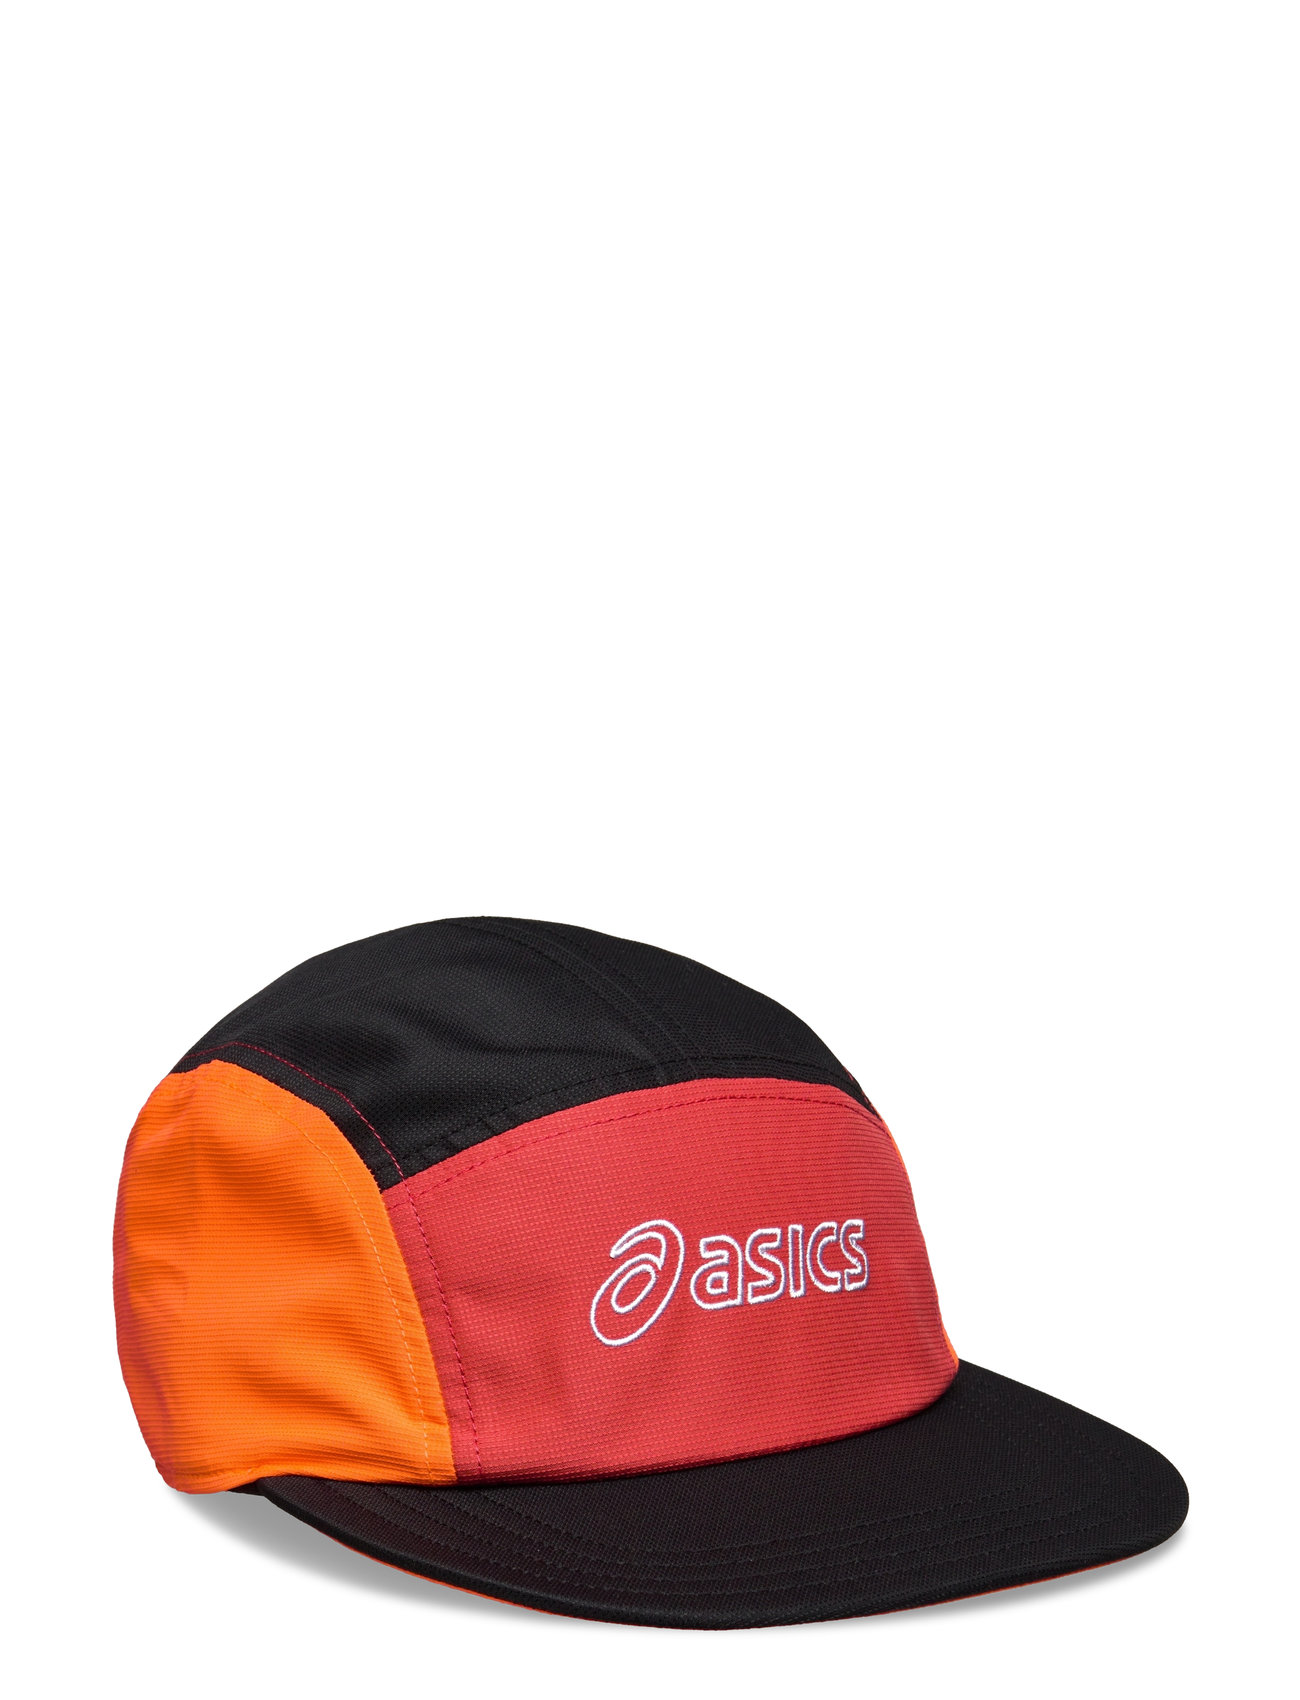 Asics 5 Panel Cap Sport Headwear Caps Red Asics